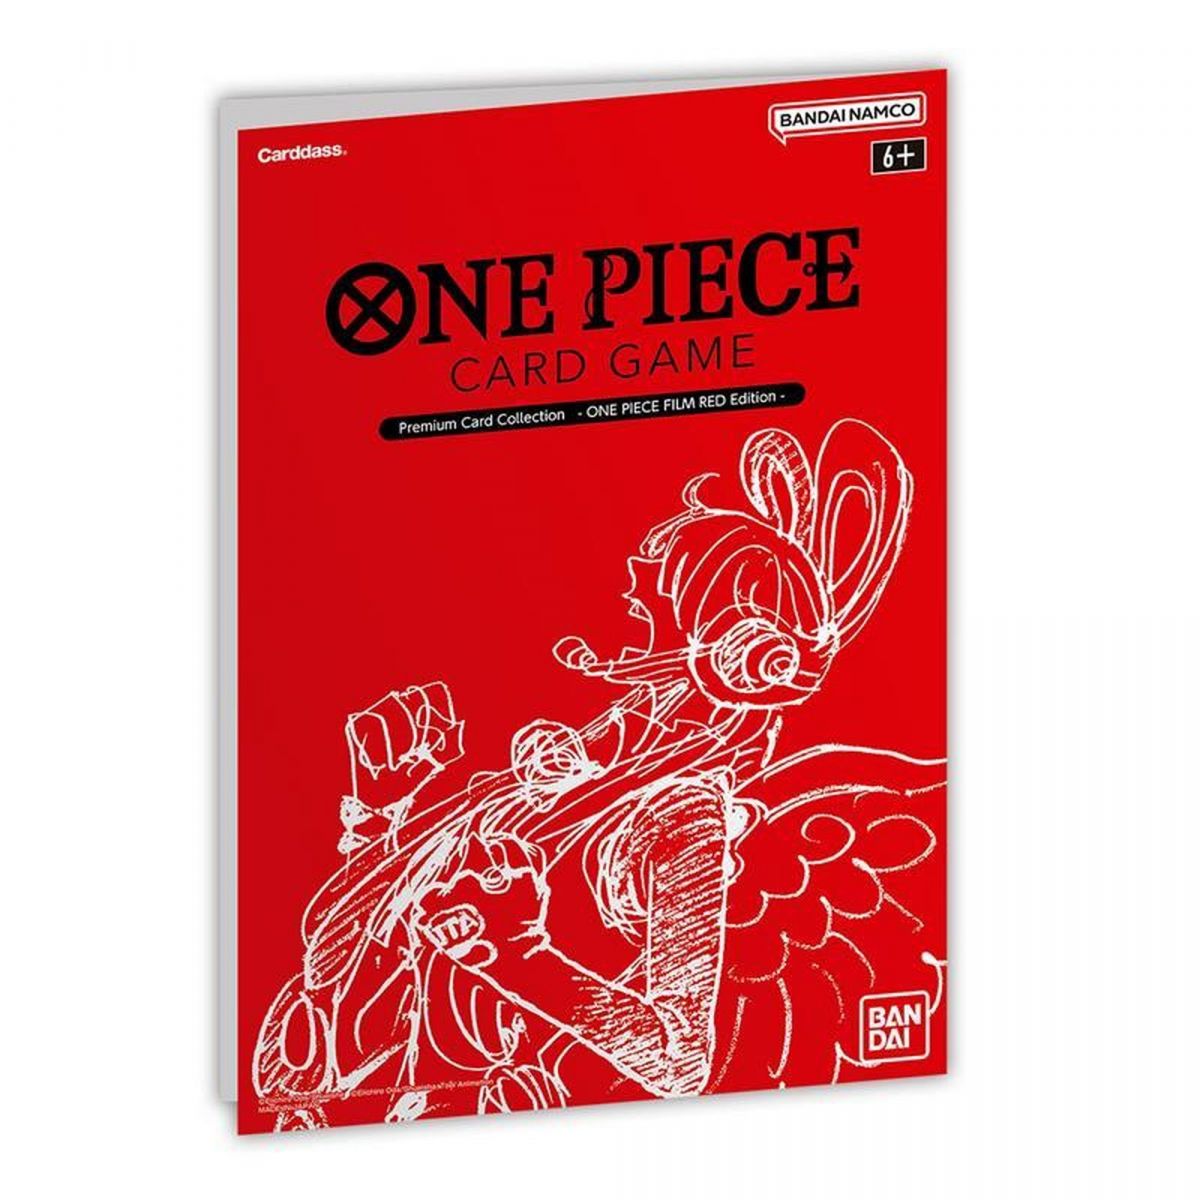 Item One Piece CG - Box Set - Premium Card Collection - Film Red Edition - EN